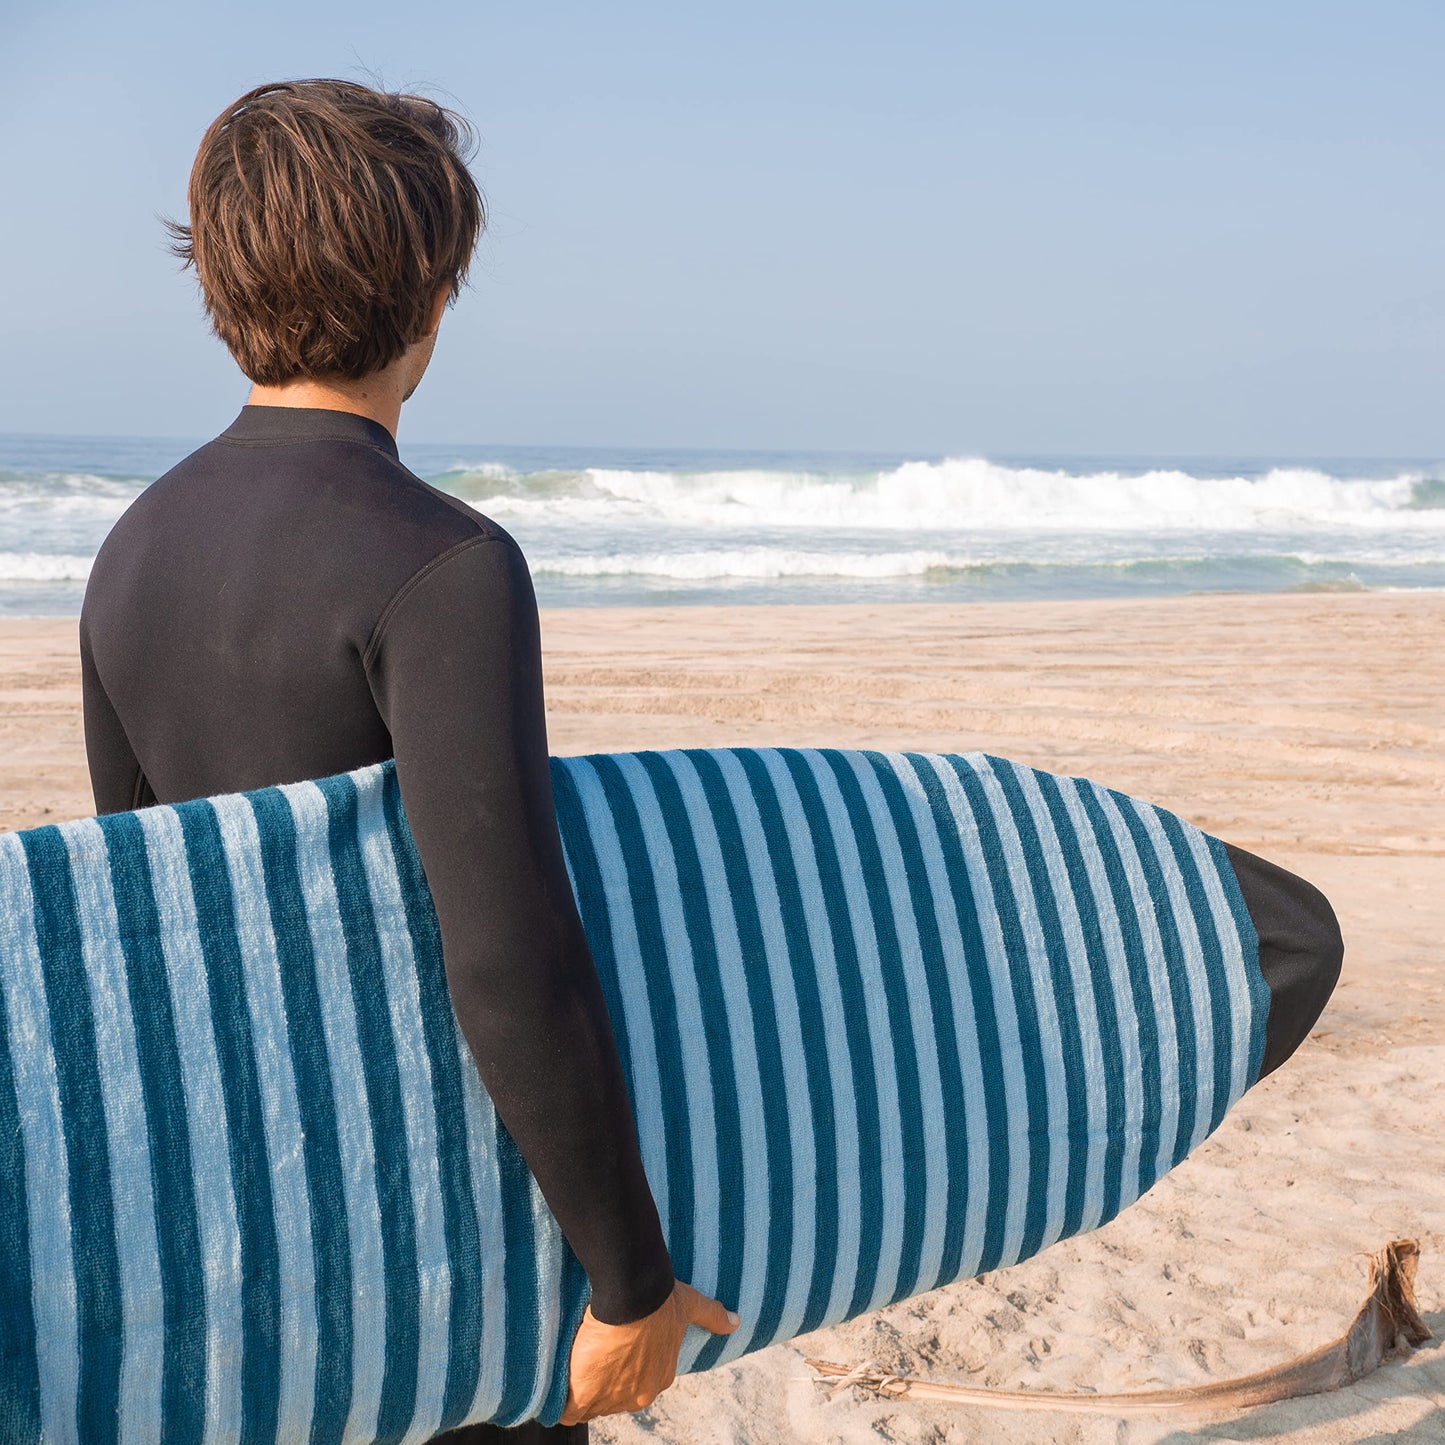 PAMGEA Surfboard Sock Cover (Aqua) - Lightweight Board Bag (Shortboard, Longboard, and Hybrid)